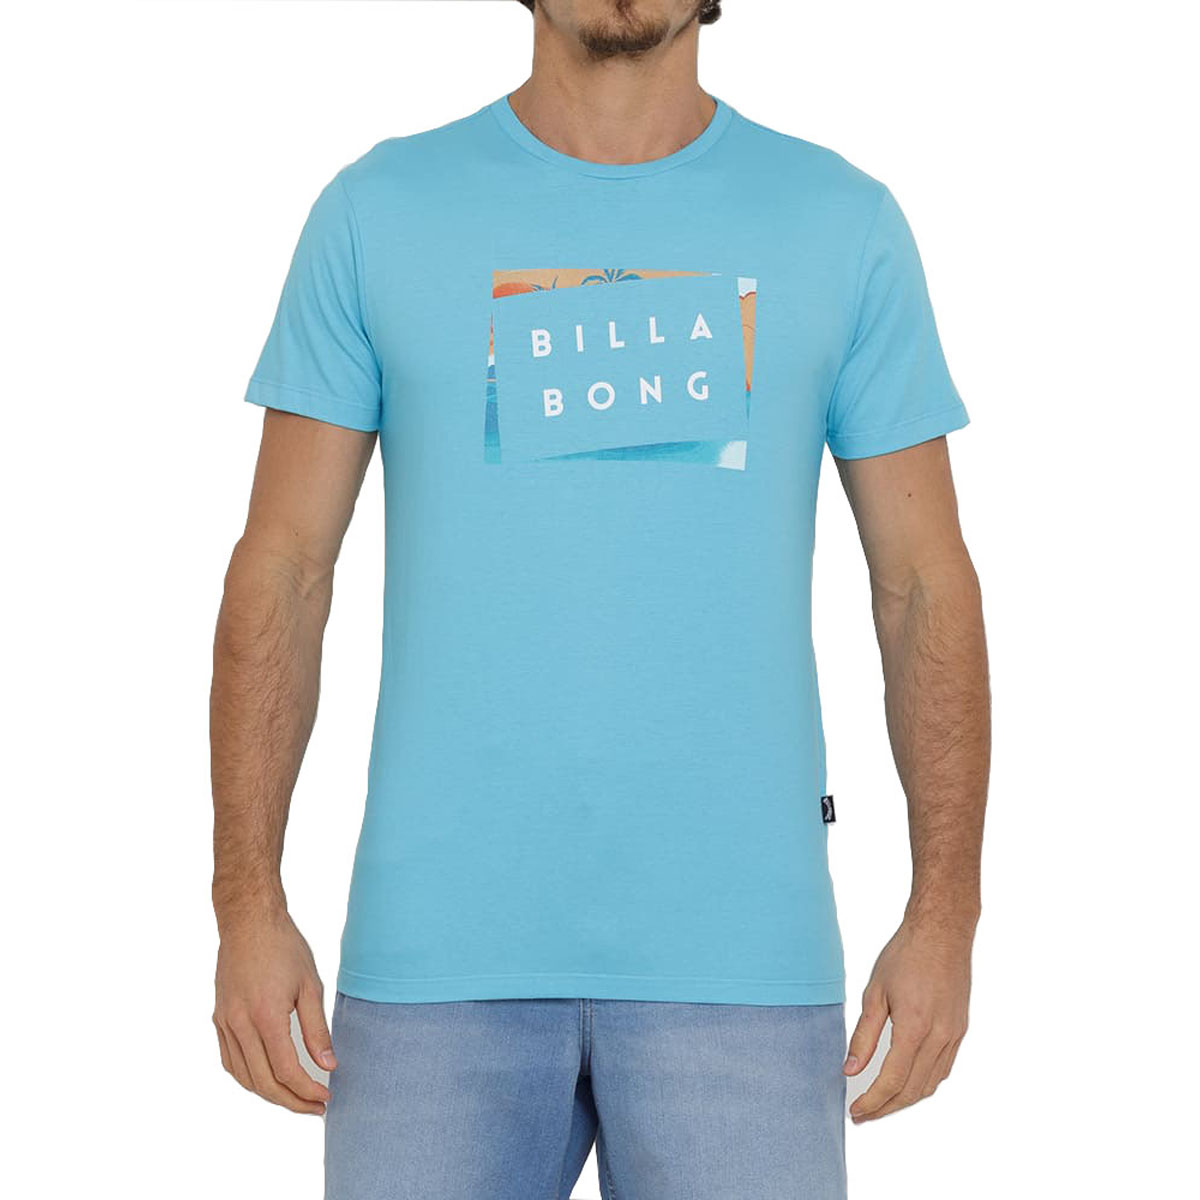 Camiseta Billabong Die Cut - Azul Claro